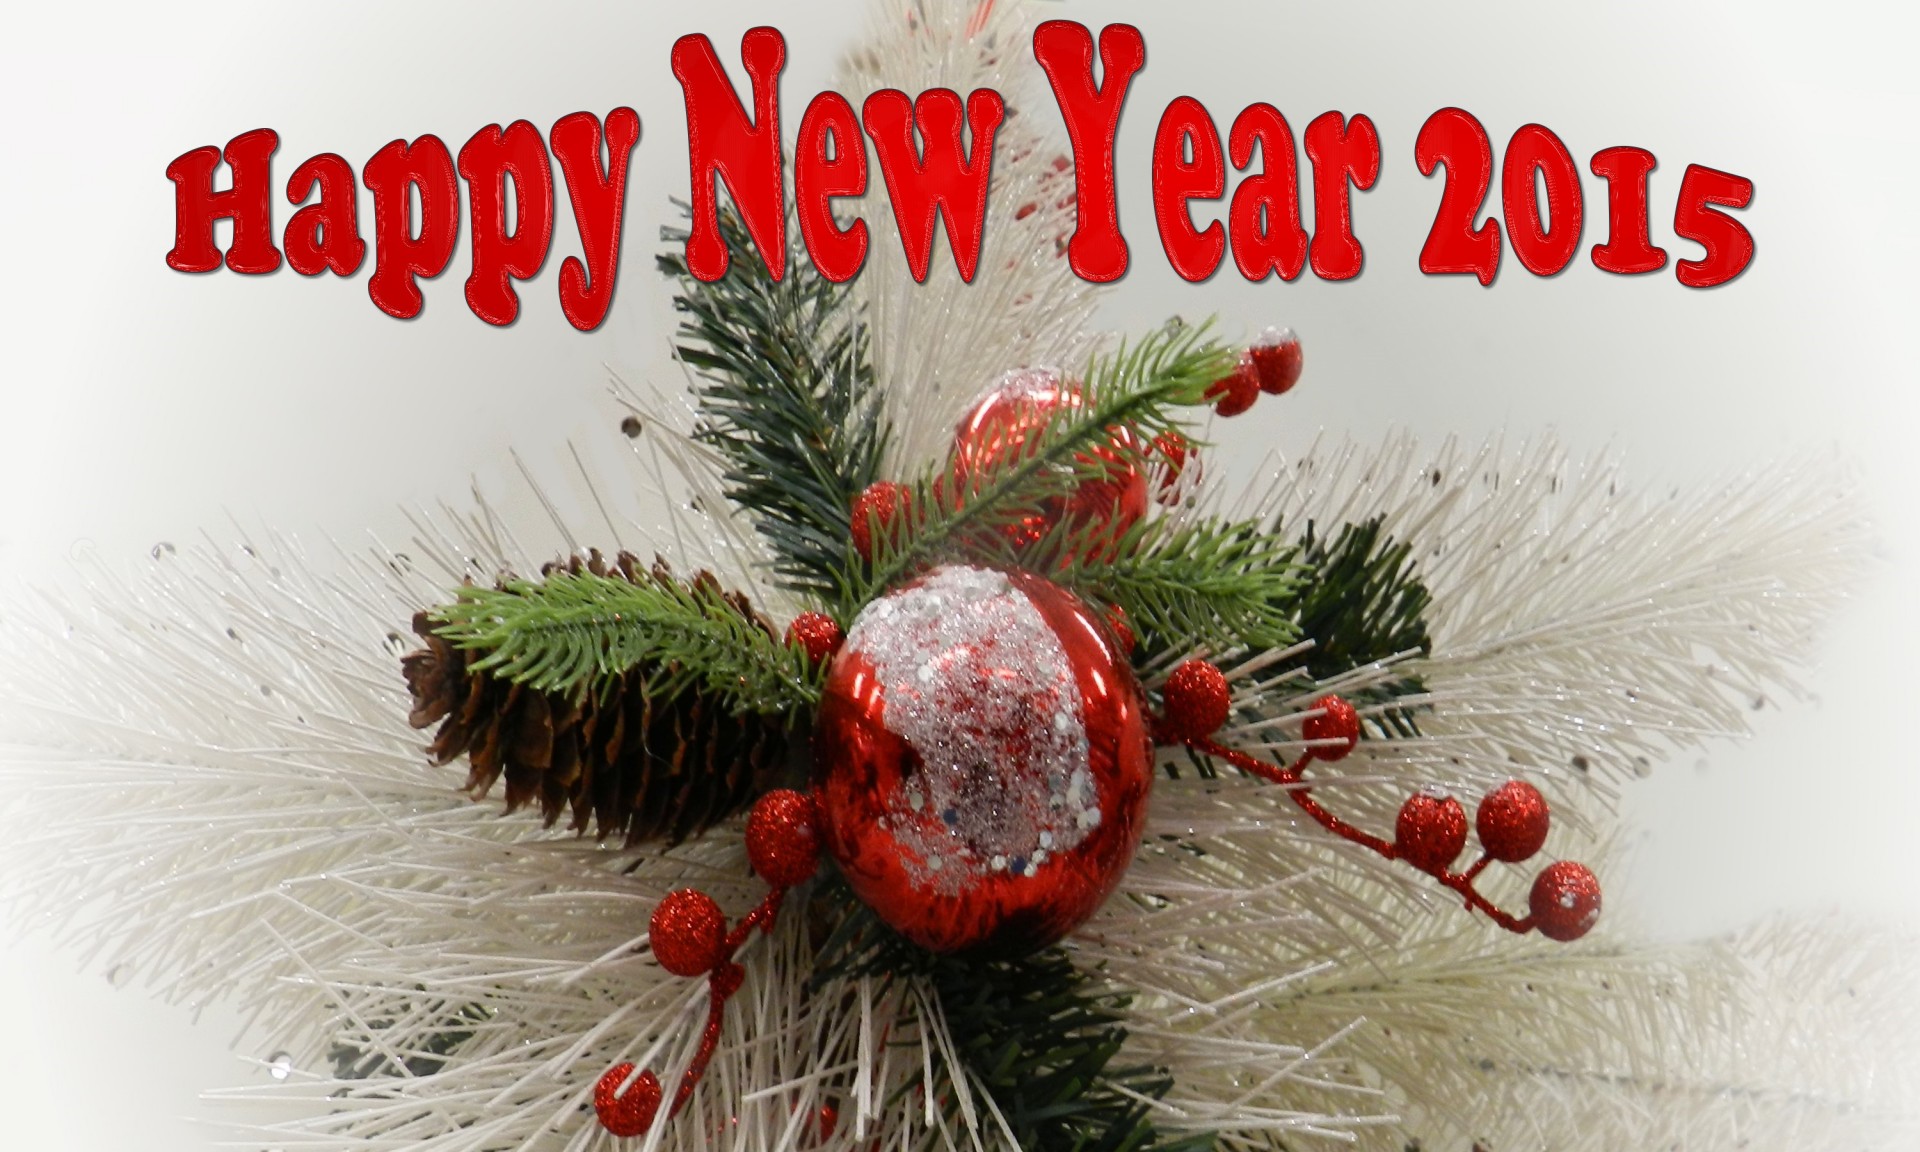 Happy New Year 2015 # 1